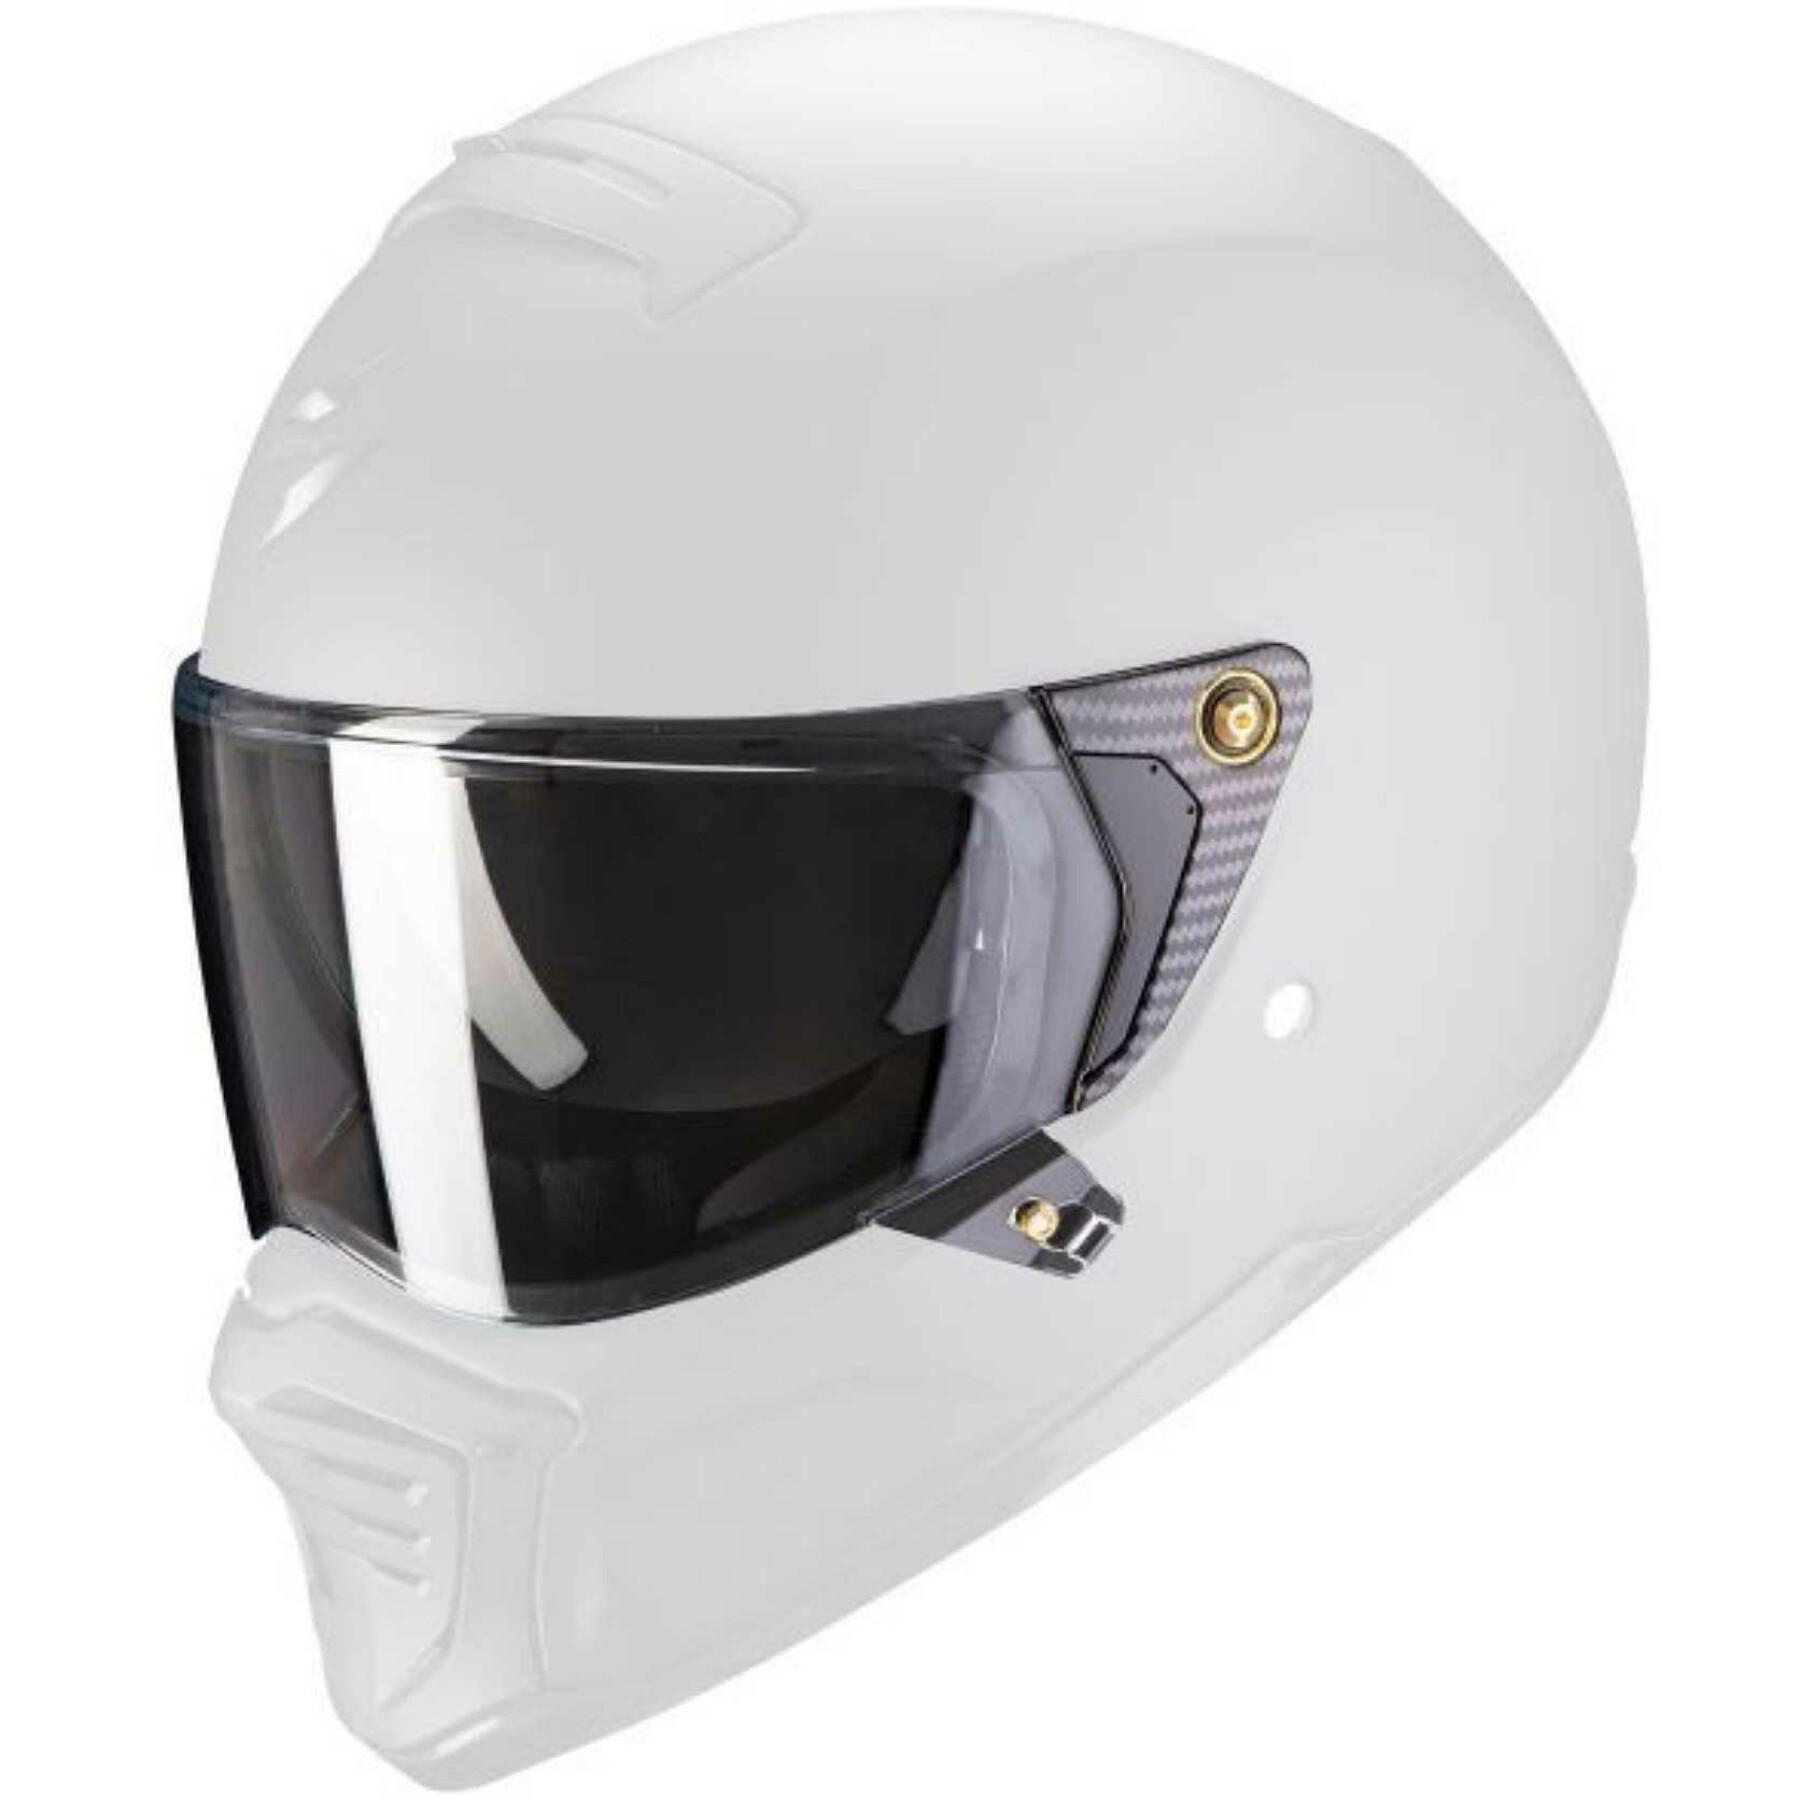 Motorcycle helmet visor Scorpion kdf-19 Exo-hx1 SHIELD maxvision ready